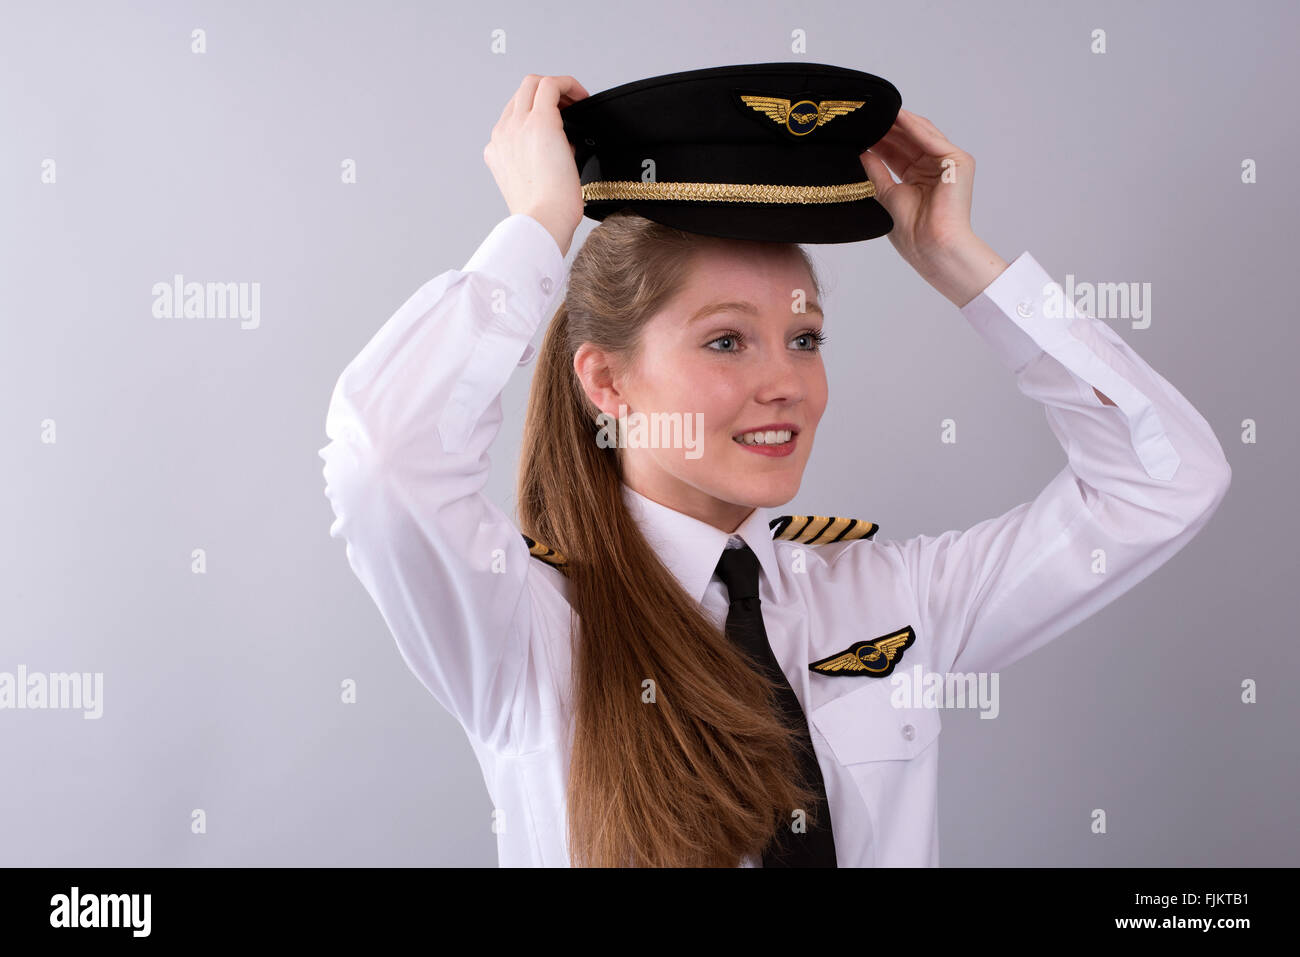 Female pilot uniform hi-res stock photography and images - Alamy